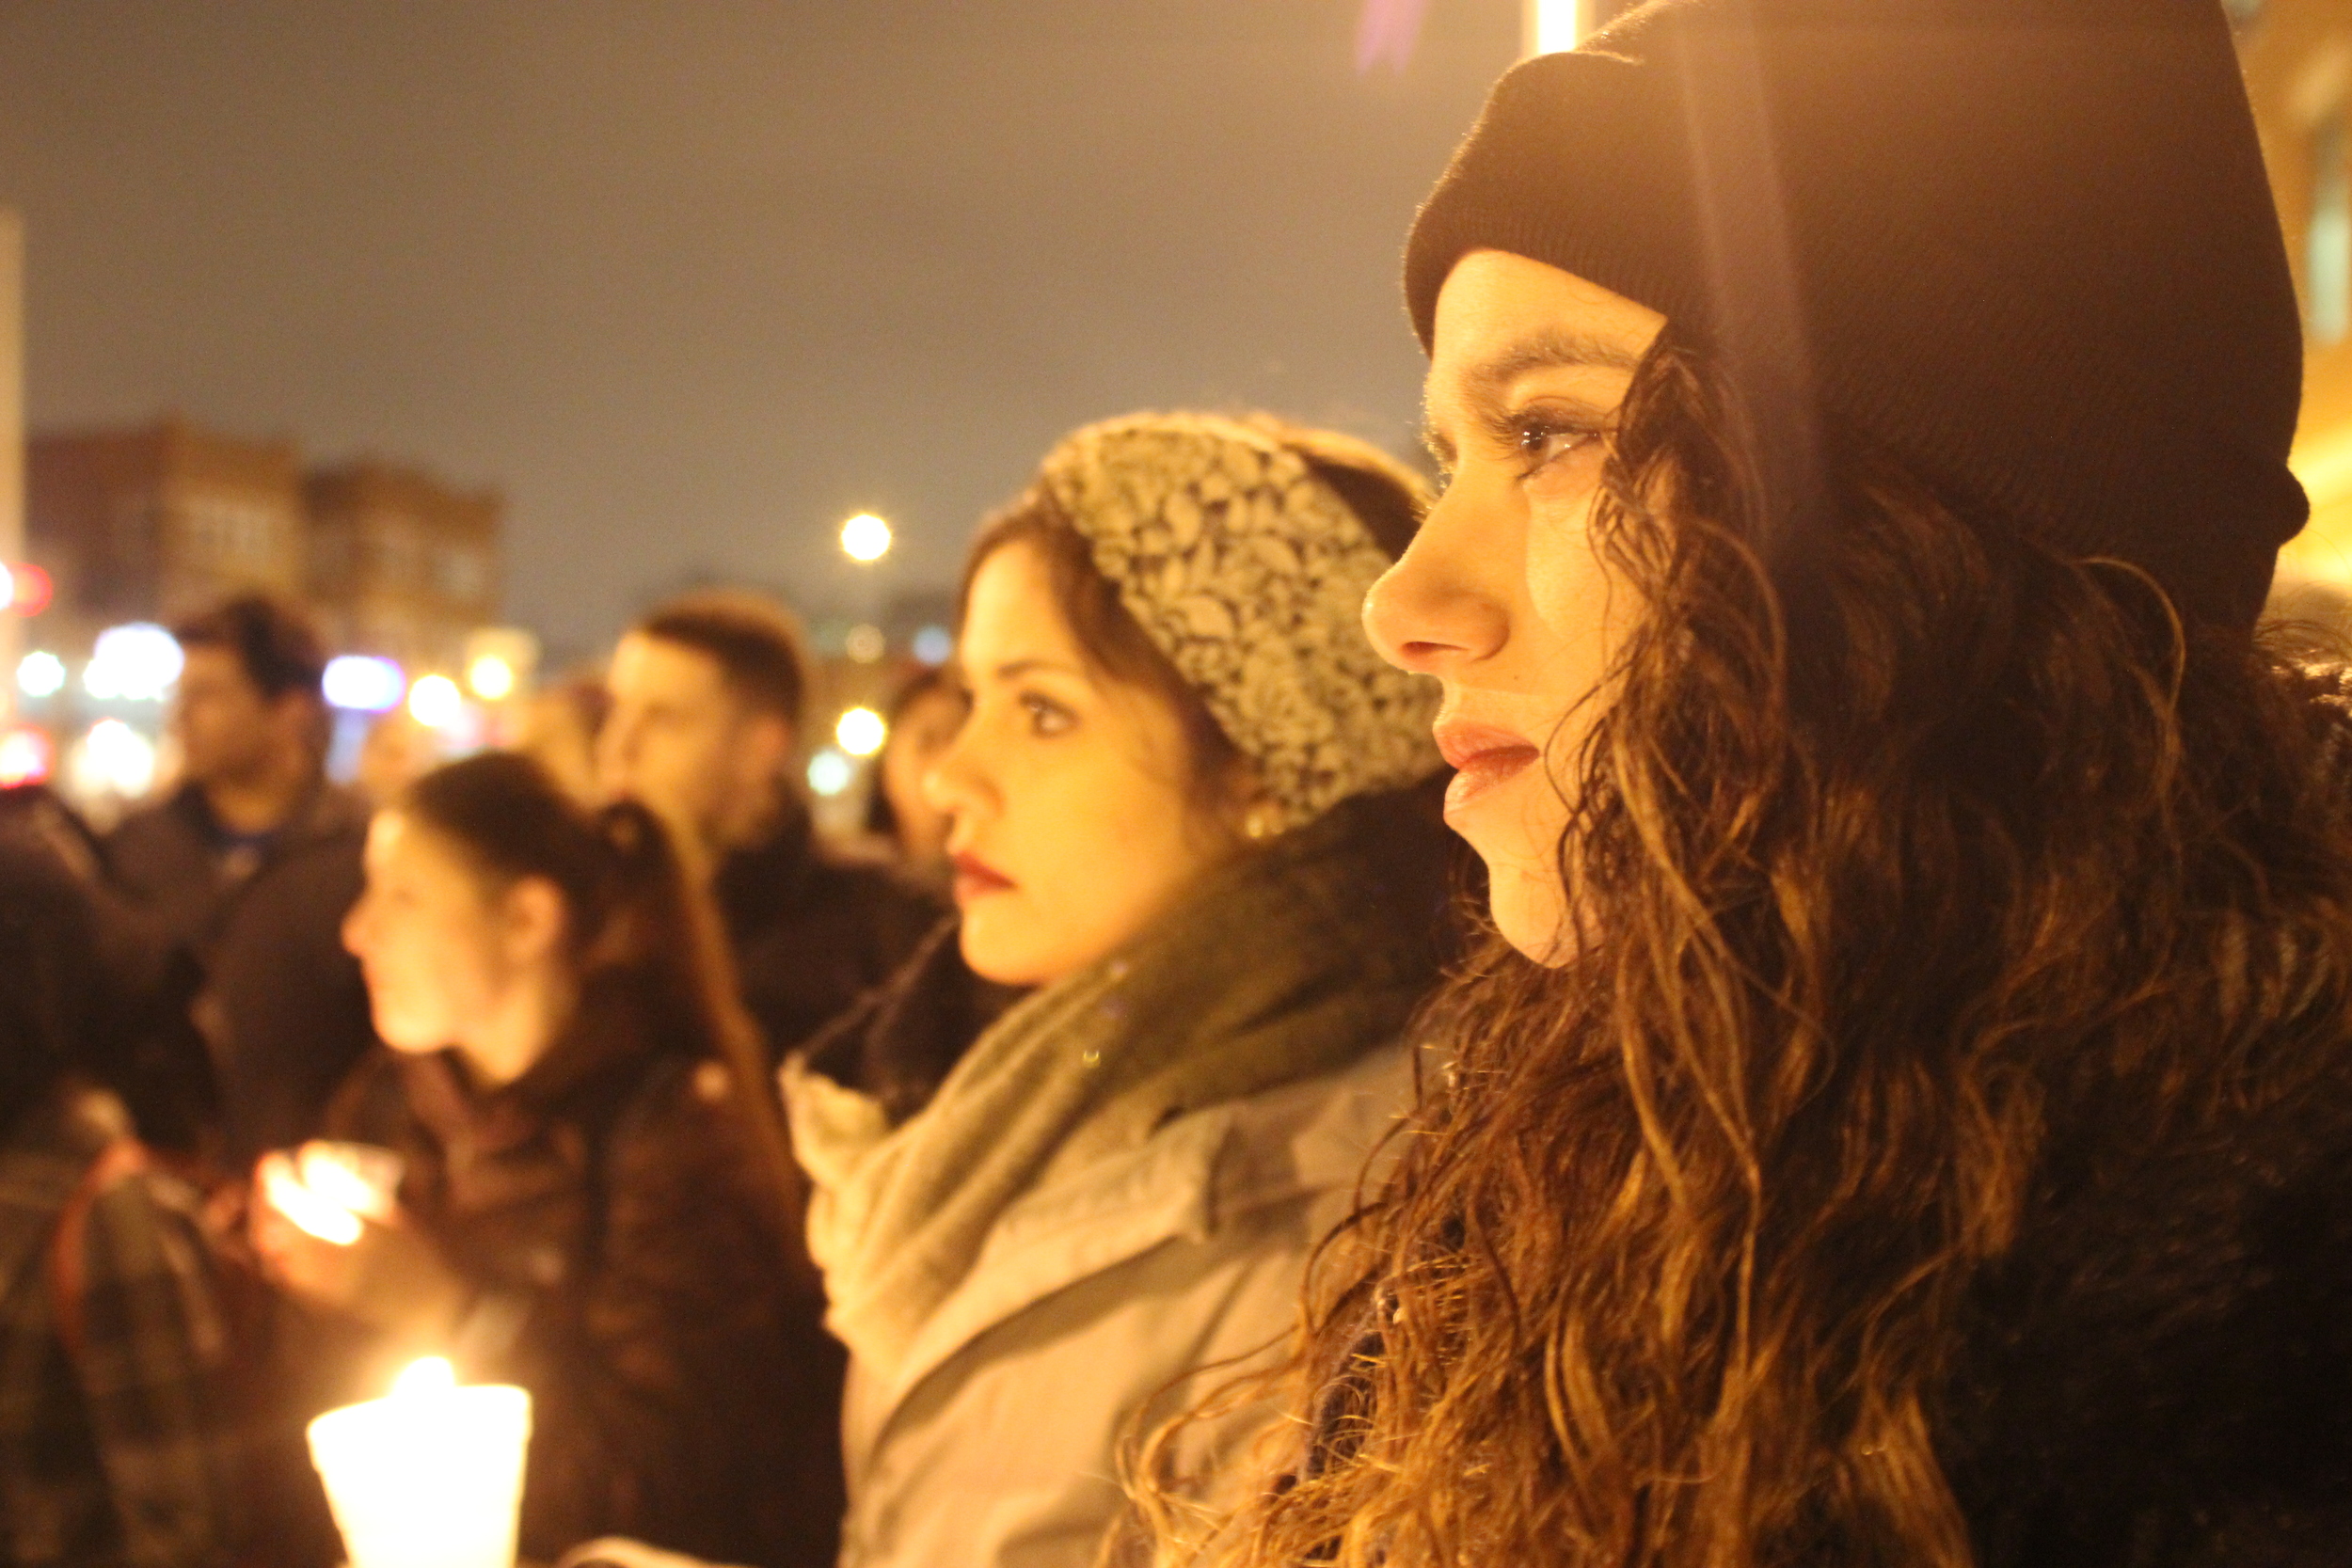   Students of The Ohio State University attend &nbsp; a candlelight vigil held for the three Muslim Americans, Deah Barakat, Yusor Abu-Salha and Razan Abu-Salha,&nbsp;murdered in Chapel Hill, North Carolina. February, 2015.  